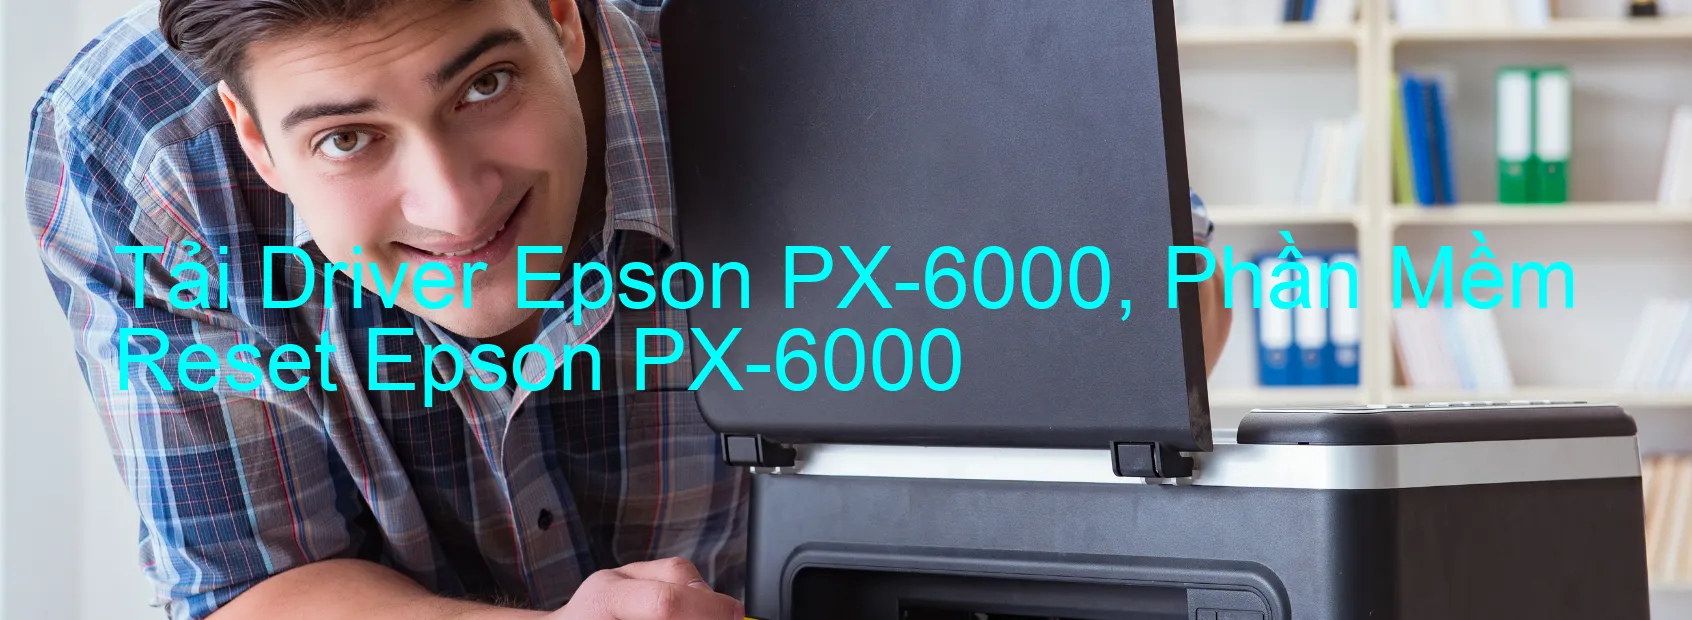 Driver Epson PX-6000, Phần Mềm Reset Epson PX-6000